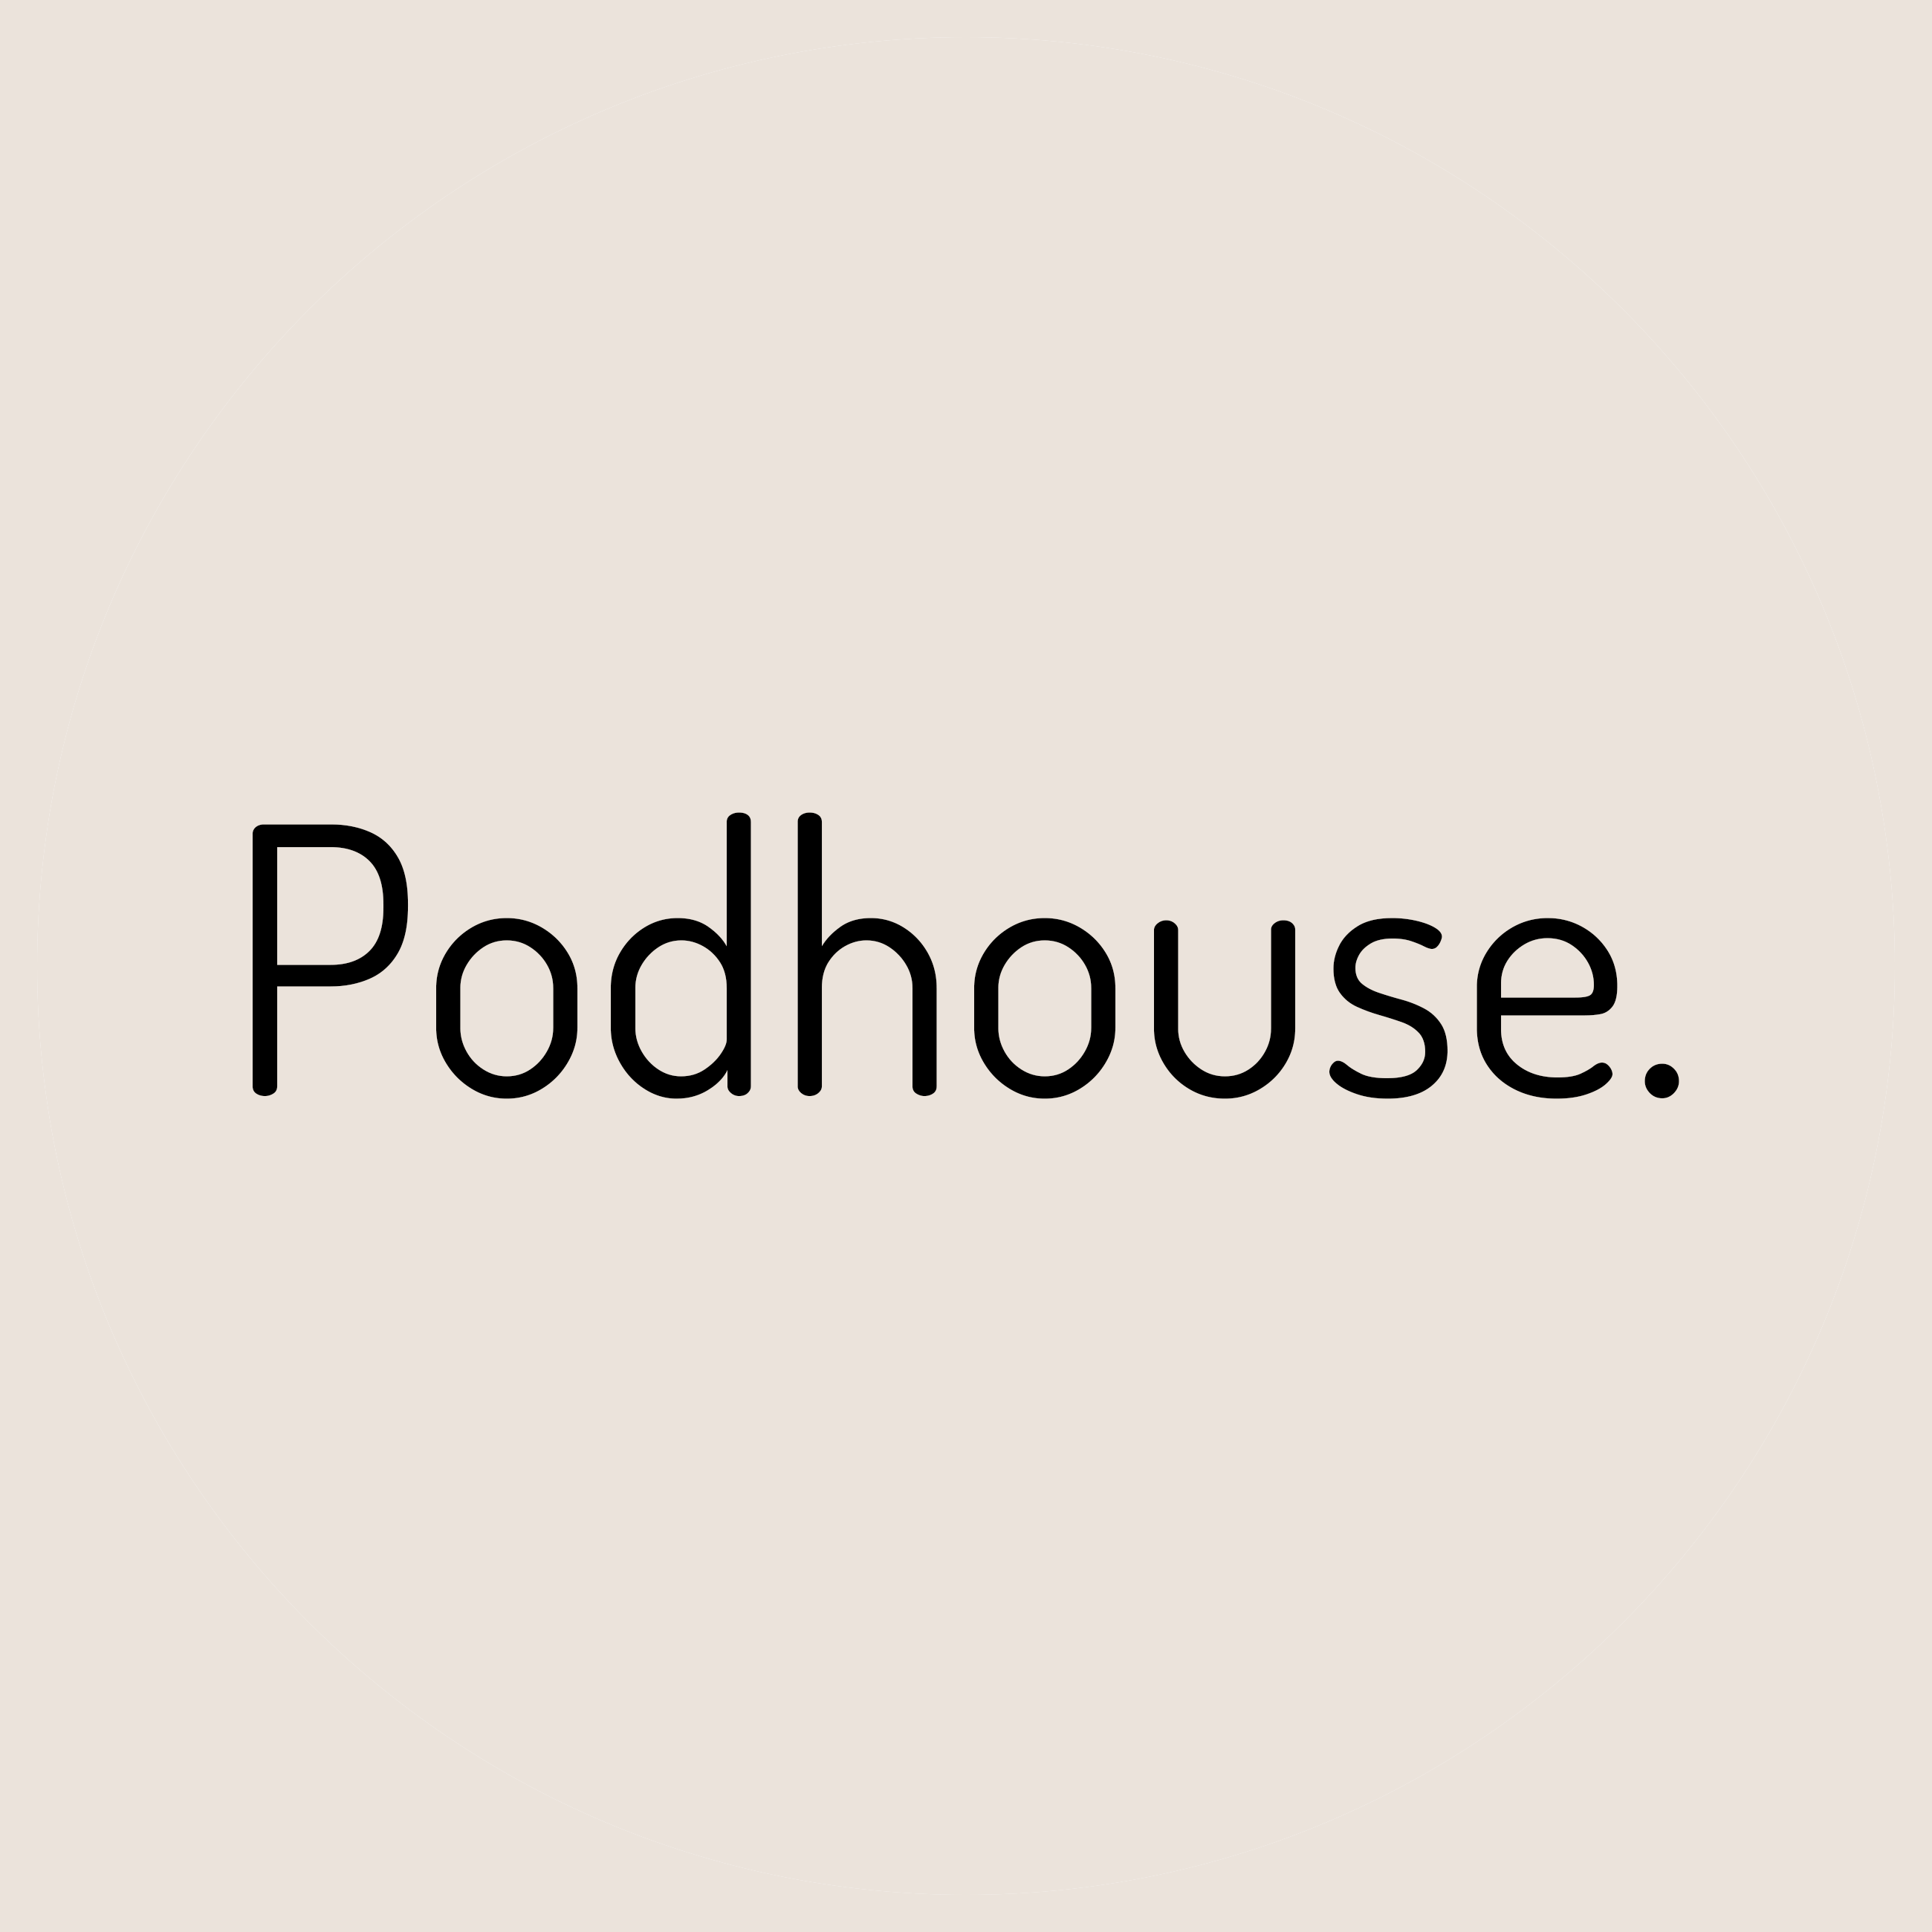 Podhouse Logo